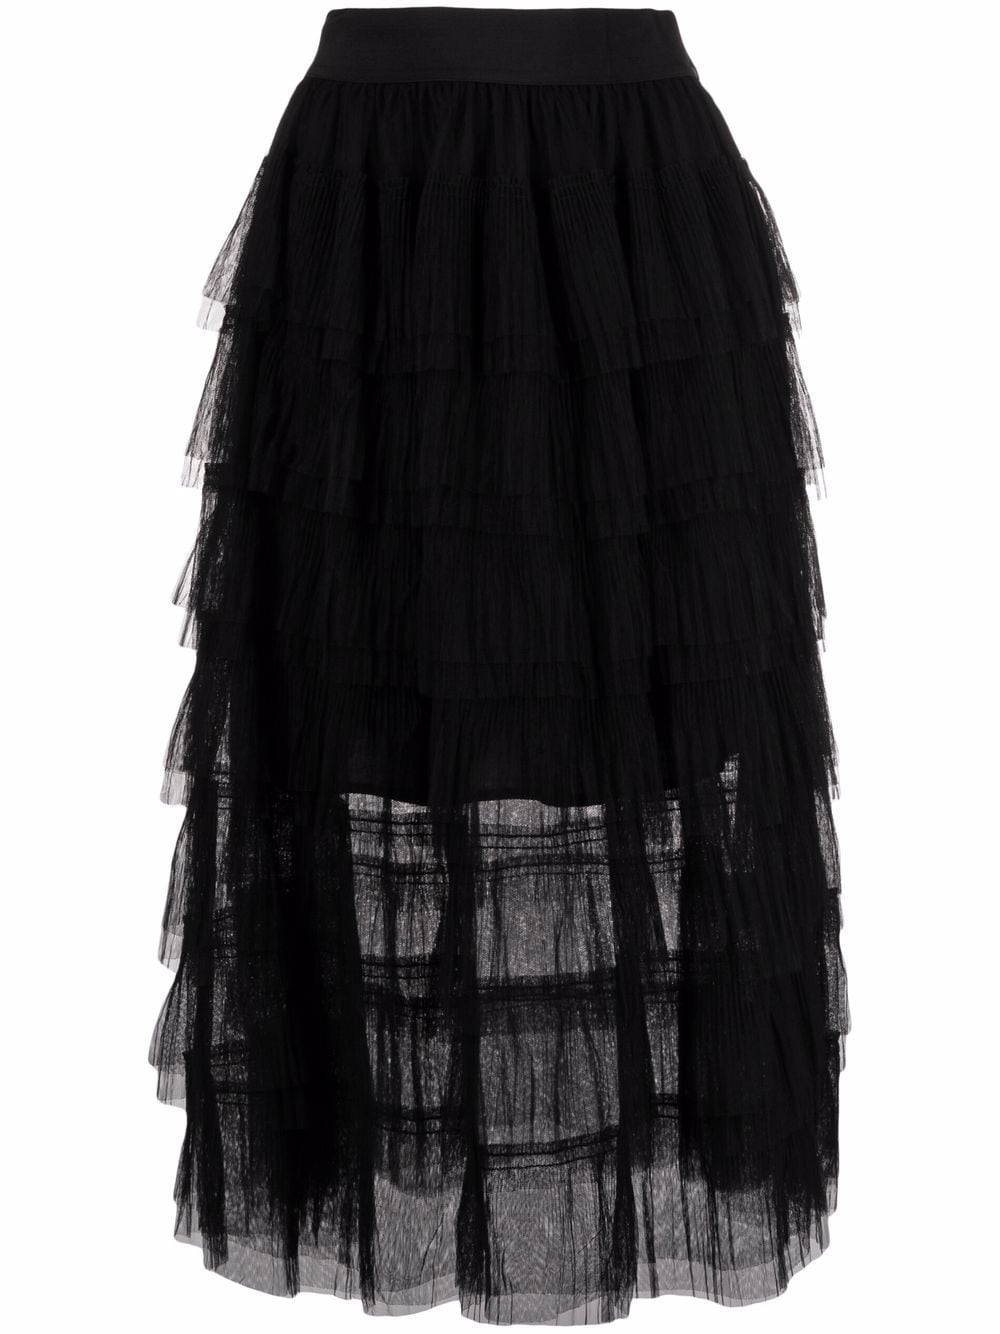 Image 1 of Maje layered tulle midi skirt